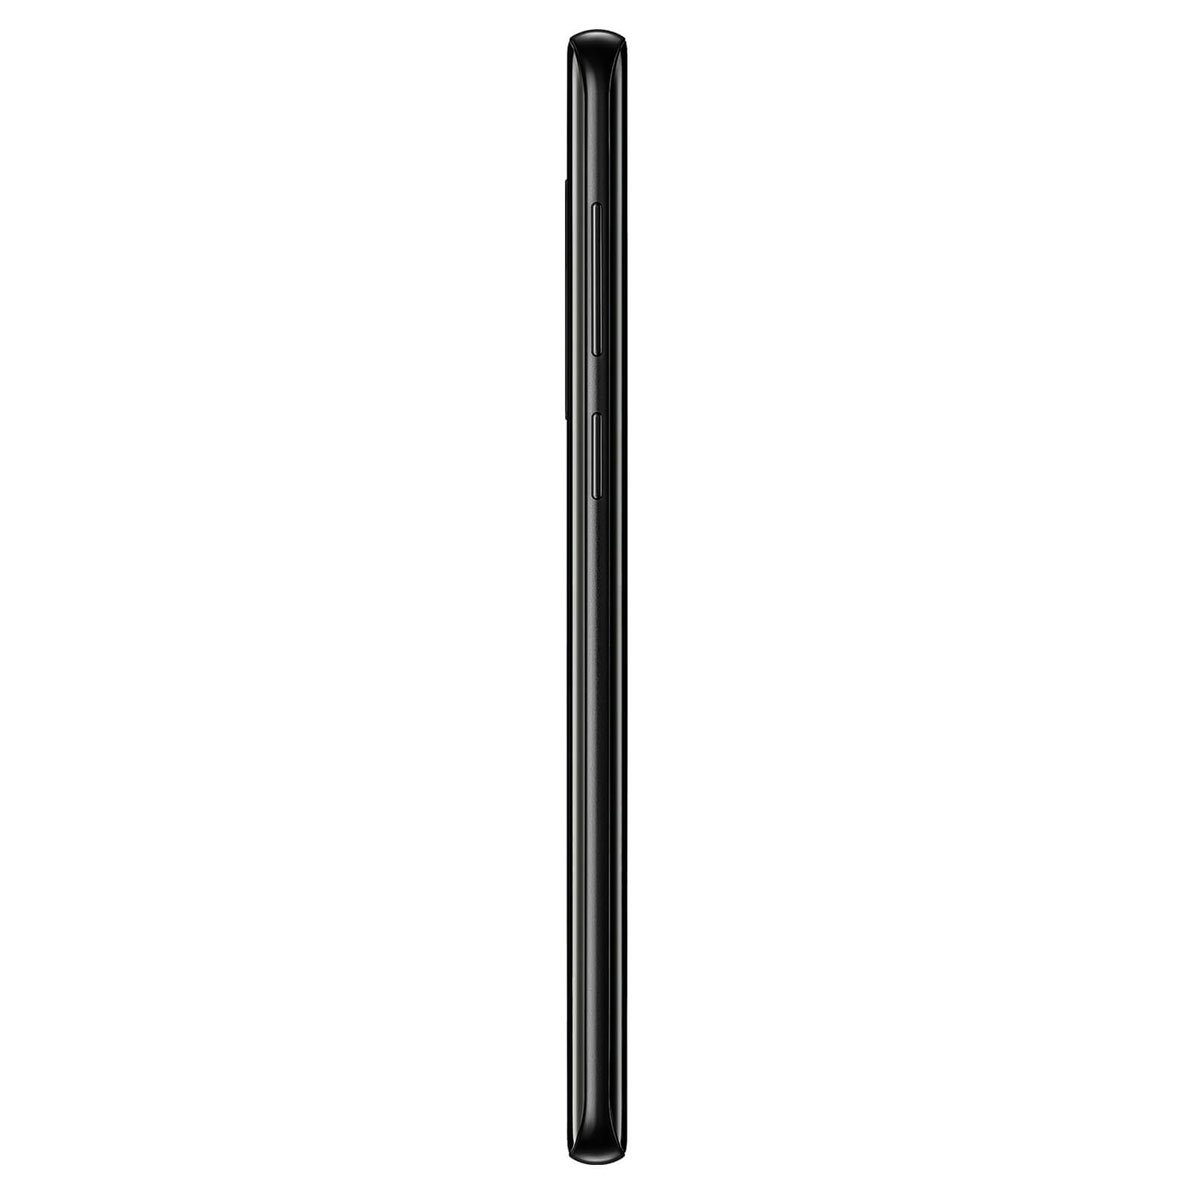 Celular Galaxy S9 Plus G9650 Negro R9 (Telcel)